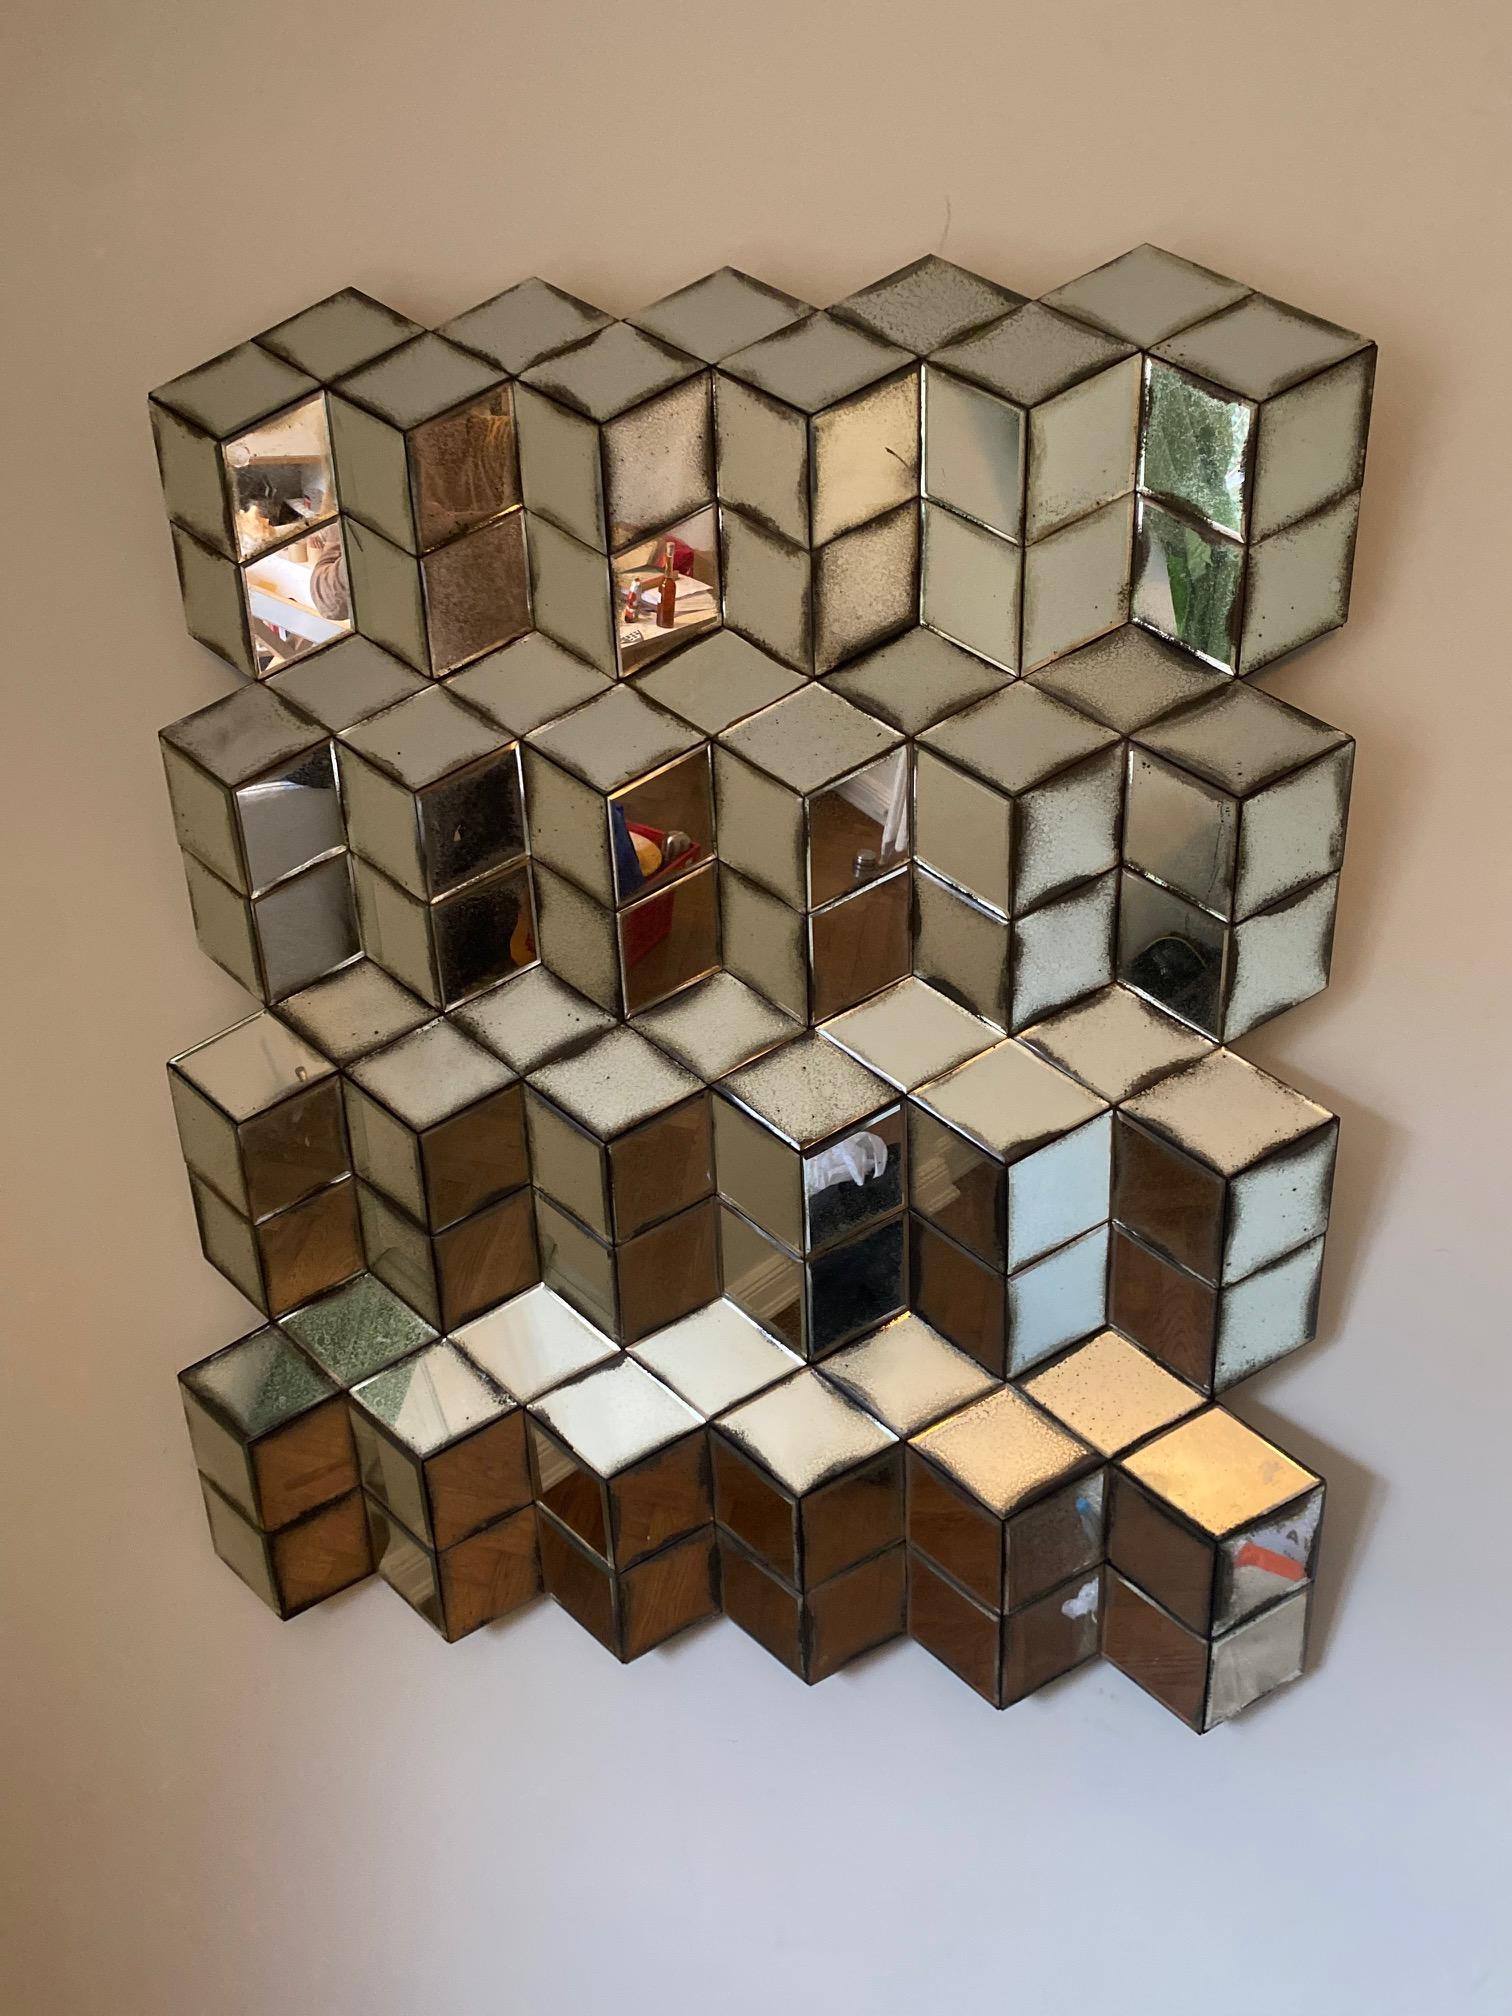 Homage to Vasarely- mirror sculpture by artist and designer Oliver de Schrijver